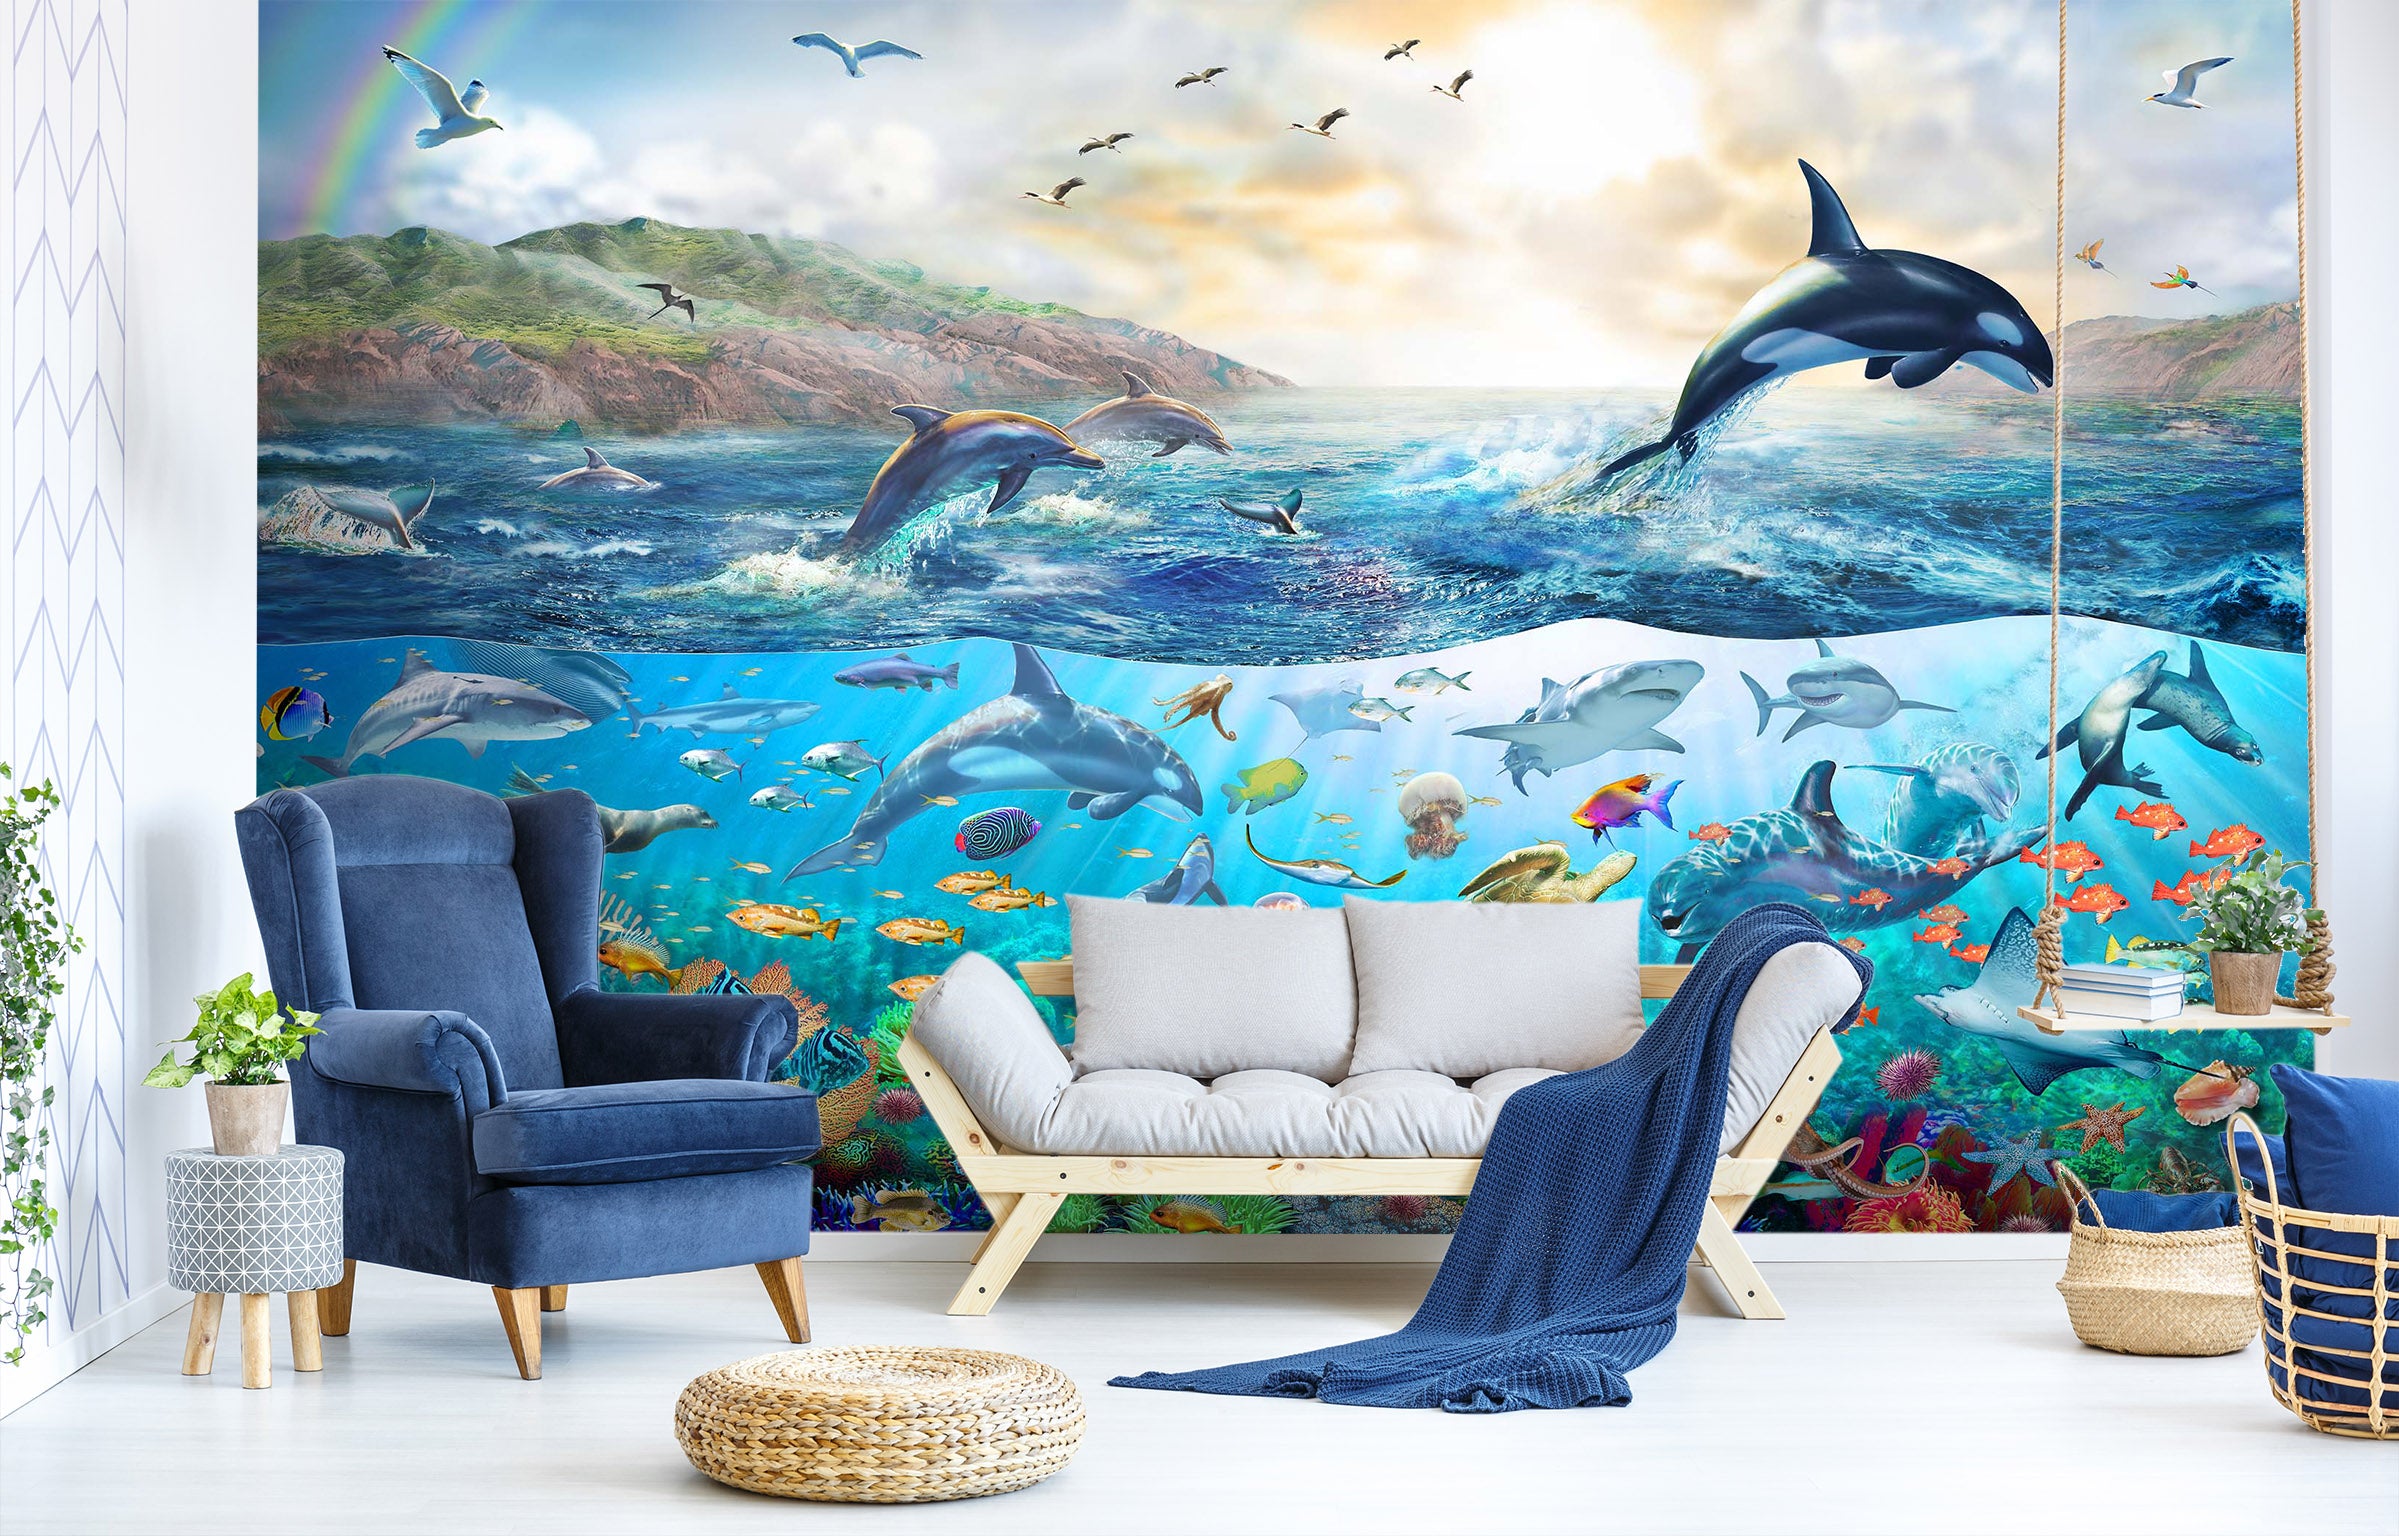 3D Dolphin Jumping 1408 Adrian Chesterman Wall Mural Wall Murals